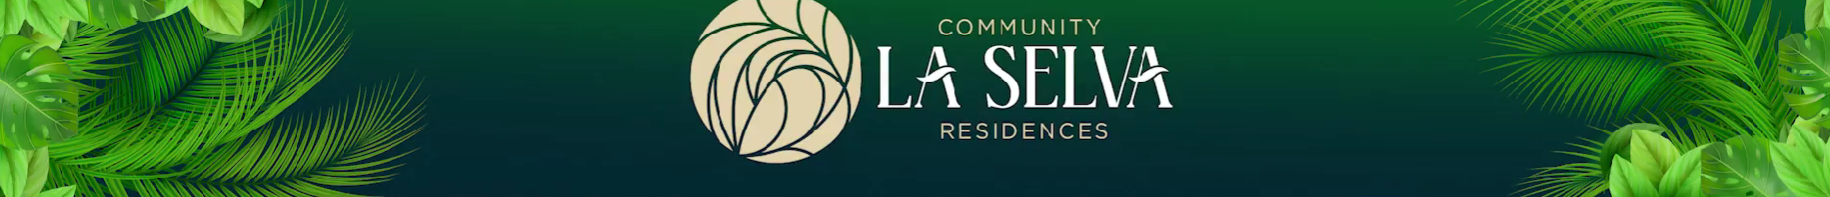 Community La Selva Residences